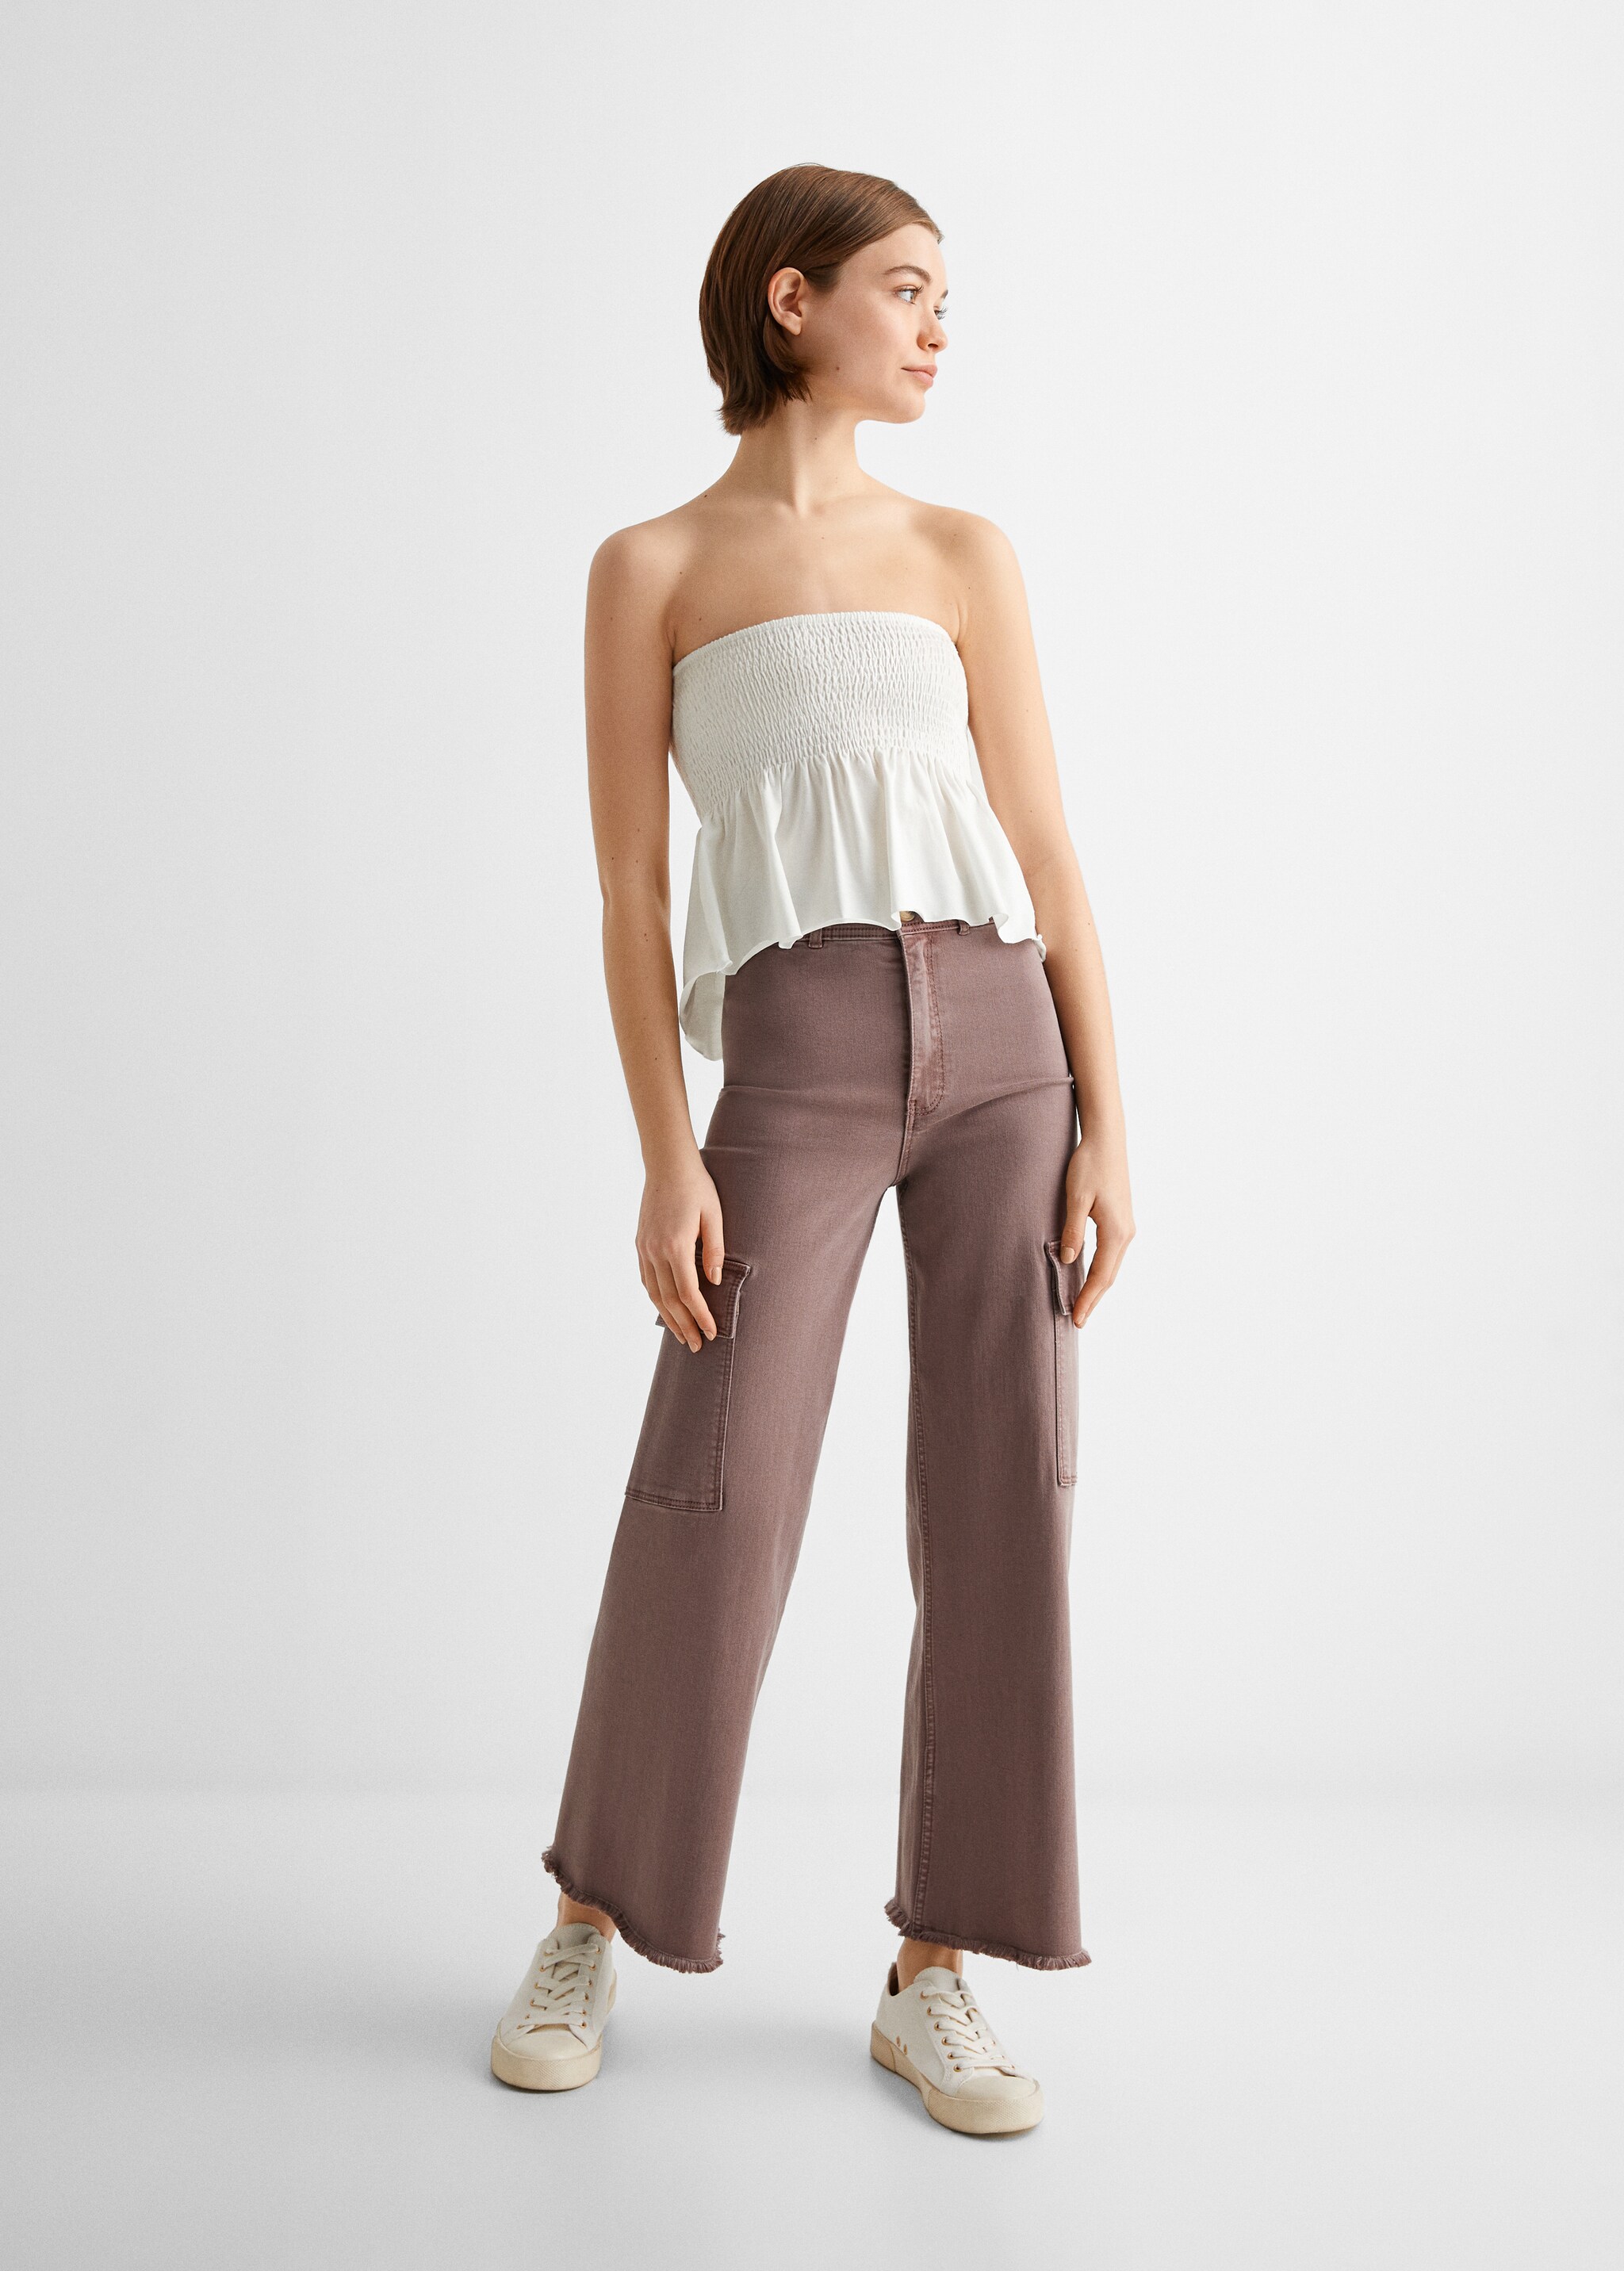 Pantalon style jupe-culotte cargo - Plan général